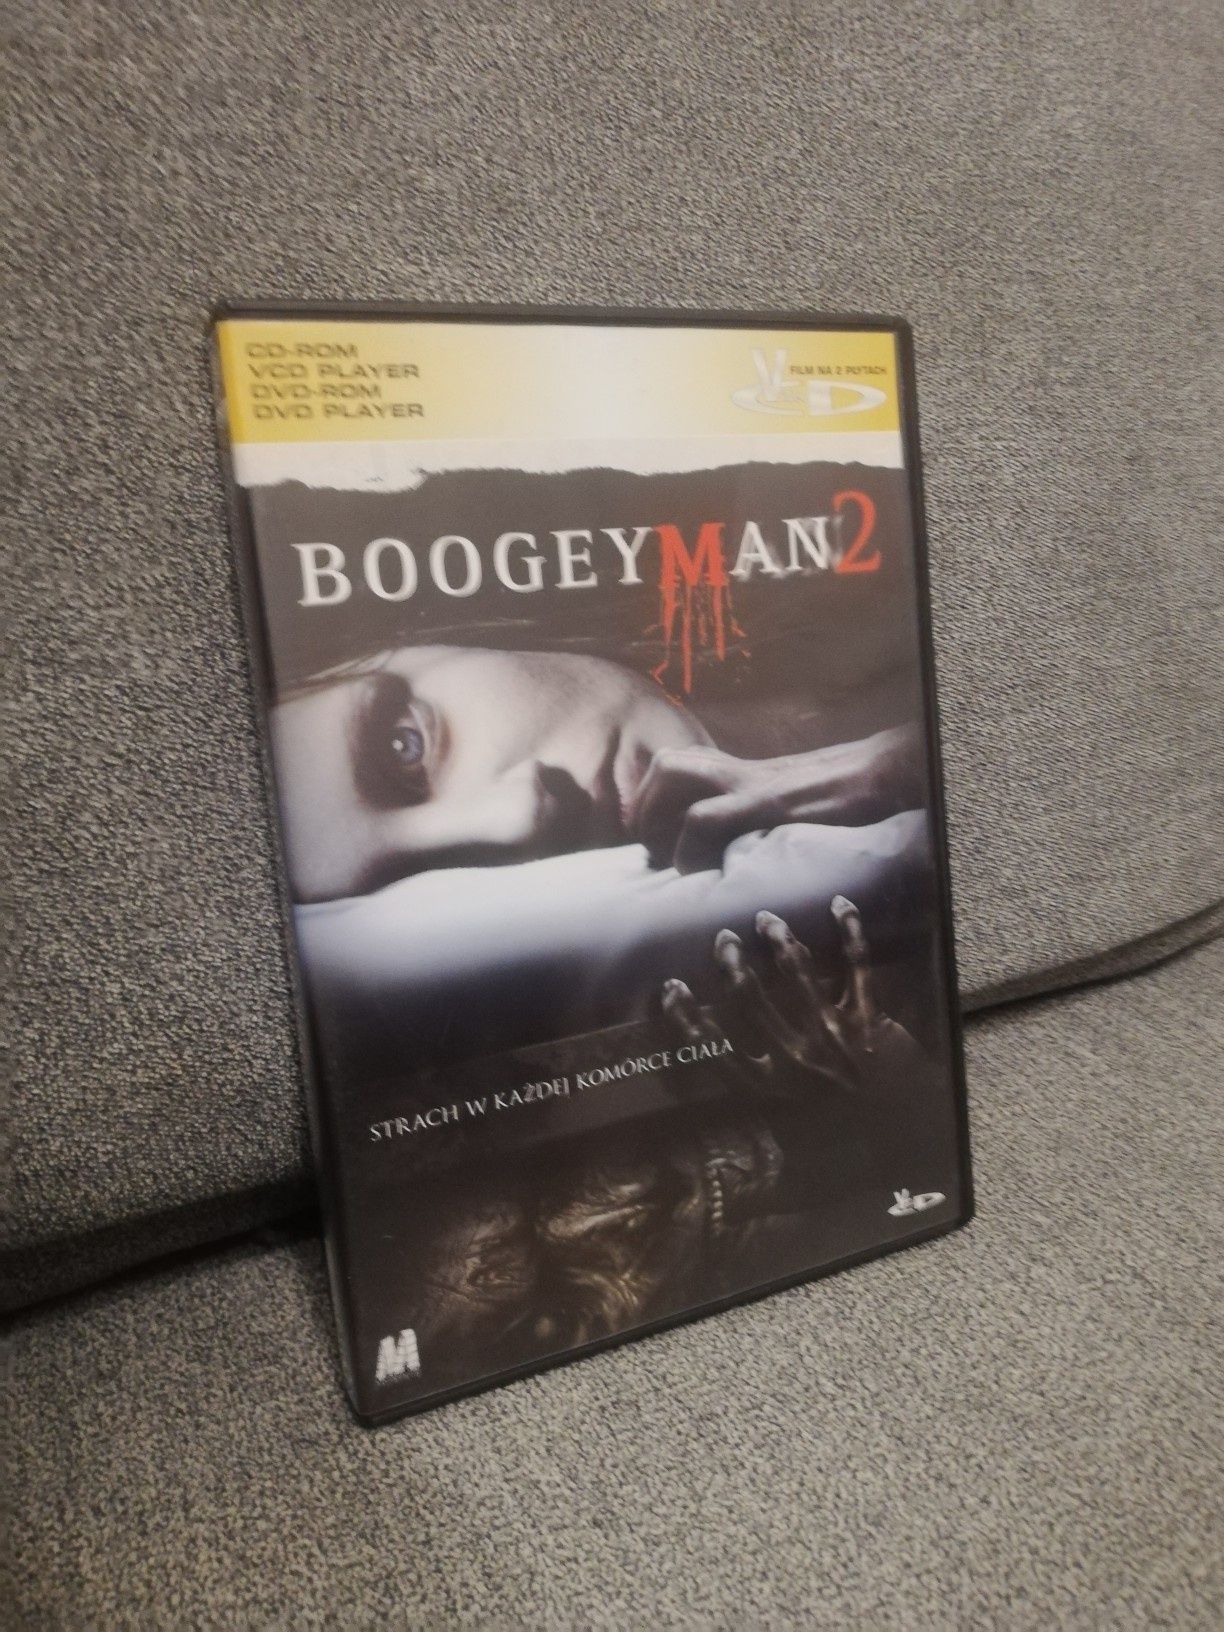 Boogeyman 2 VCD BOX